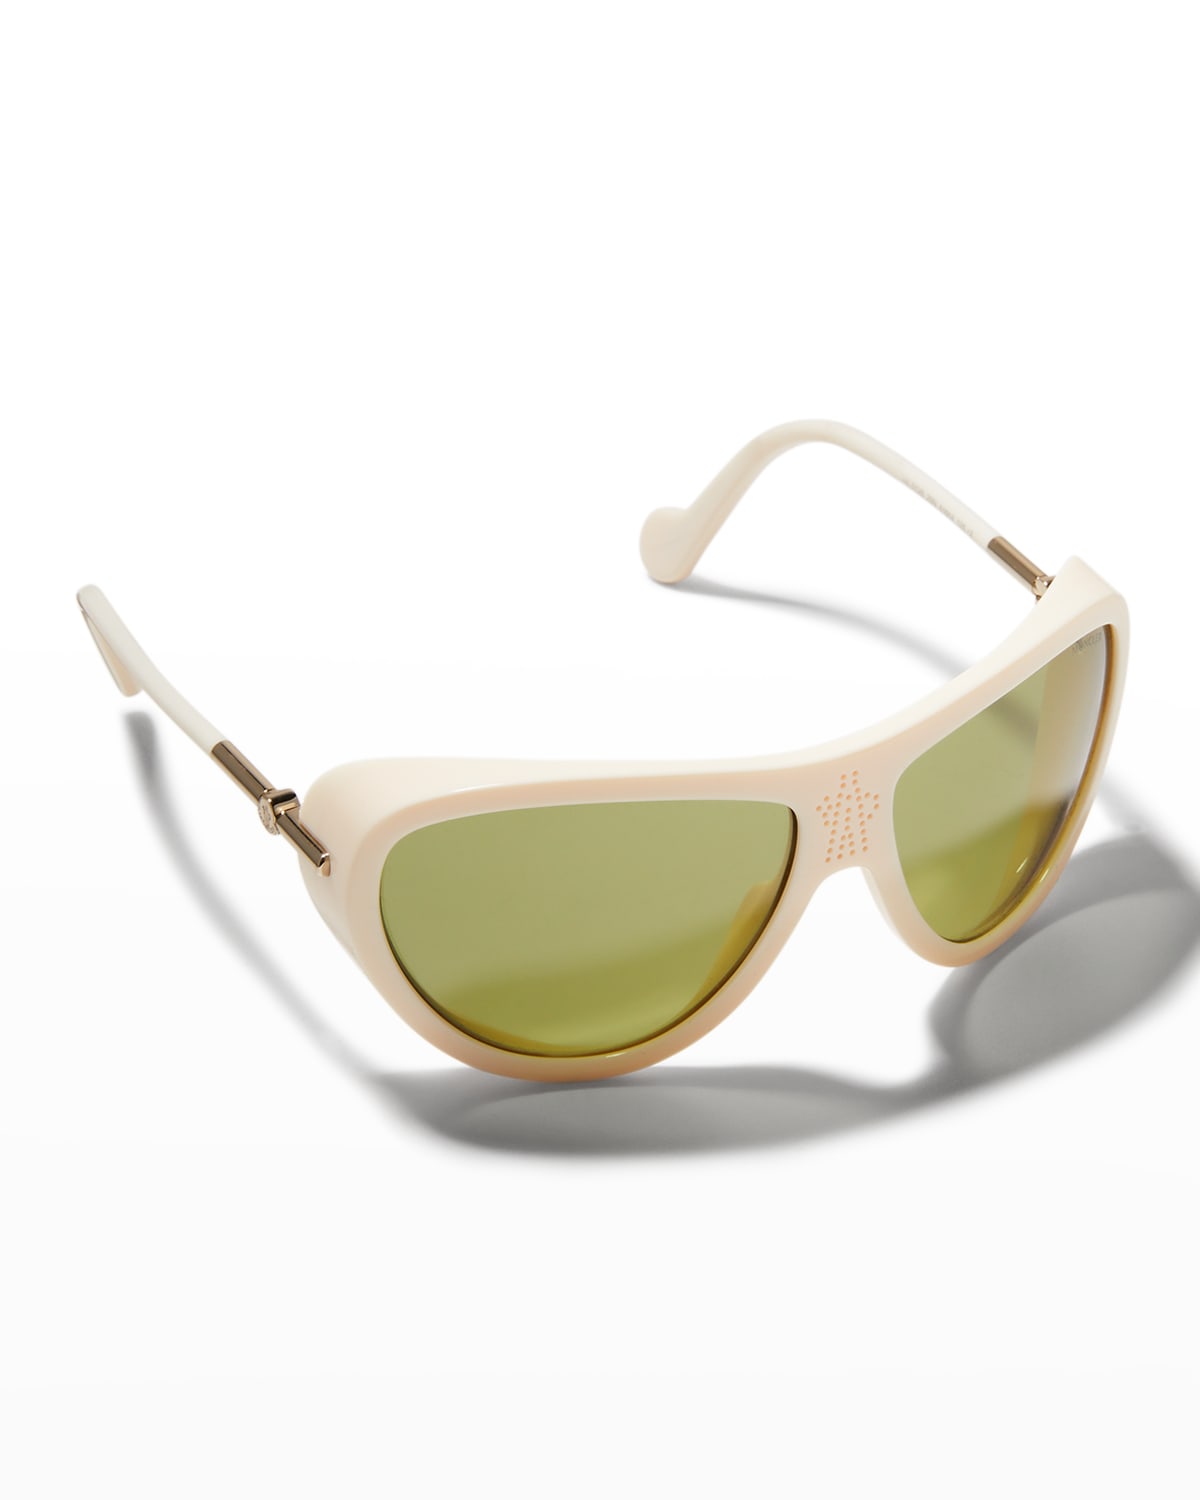 Men's ML0128 Polarized Perforated Aviator Sunglasses